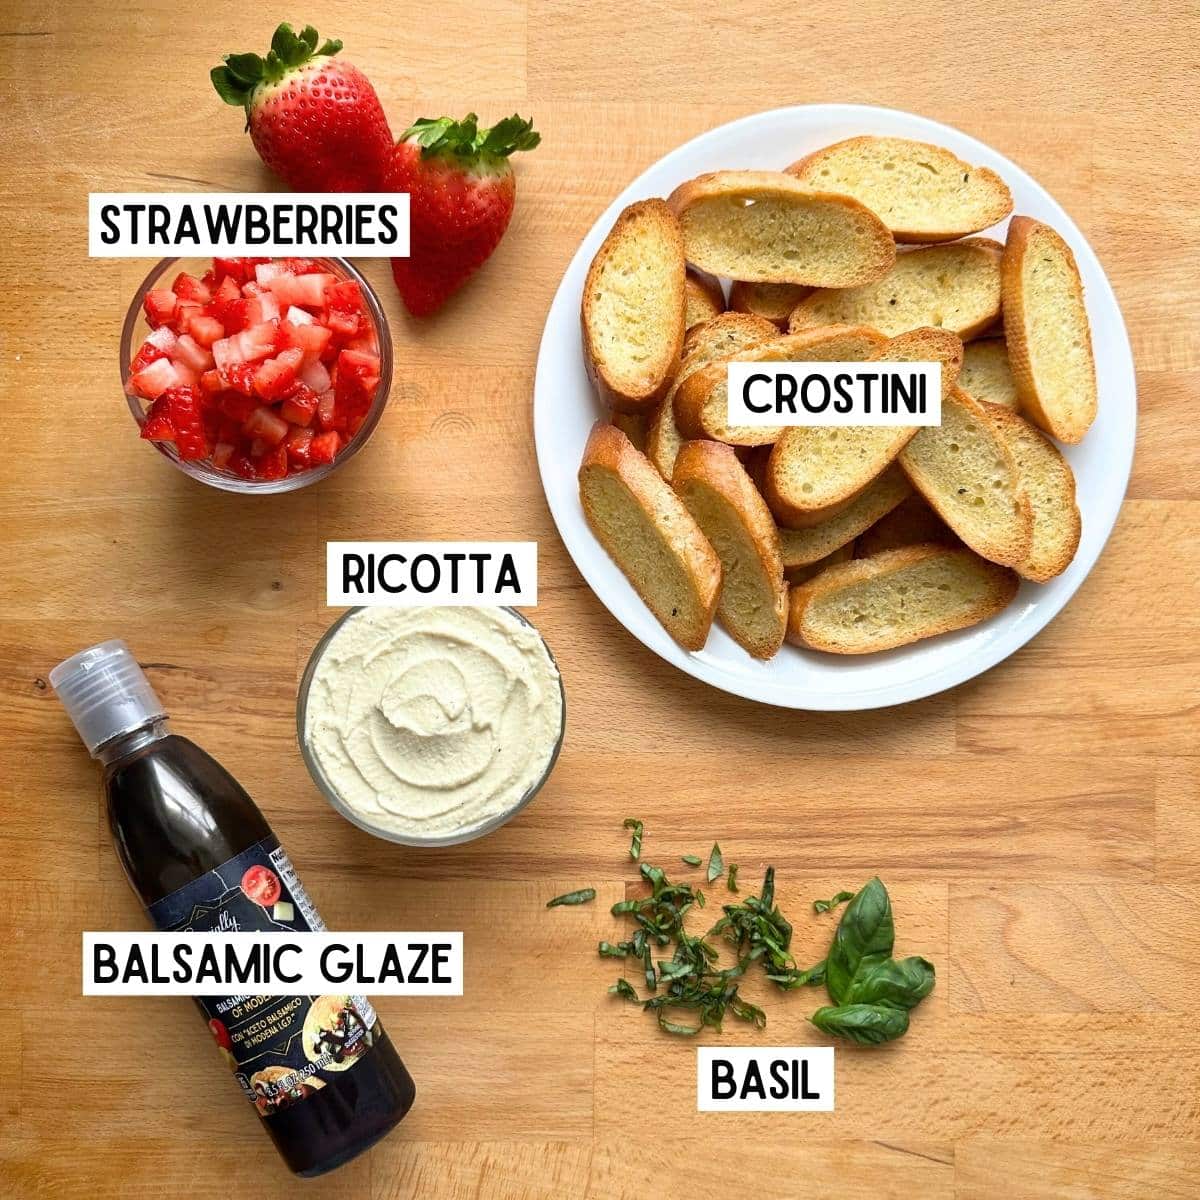 Ingredients needed to make strawberry crostini with corresponding labels: strawberries, crostini, ricotta, balsamic glaze, and basil.